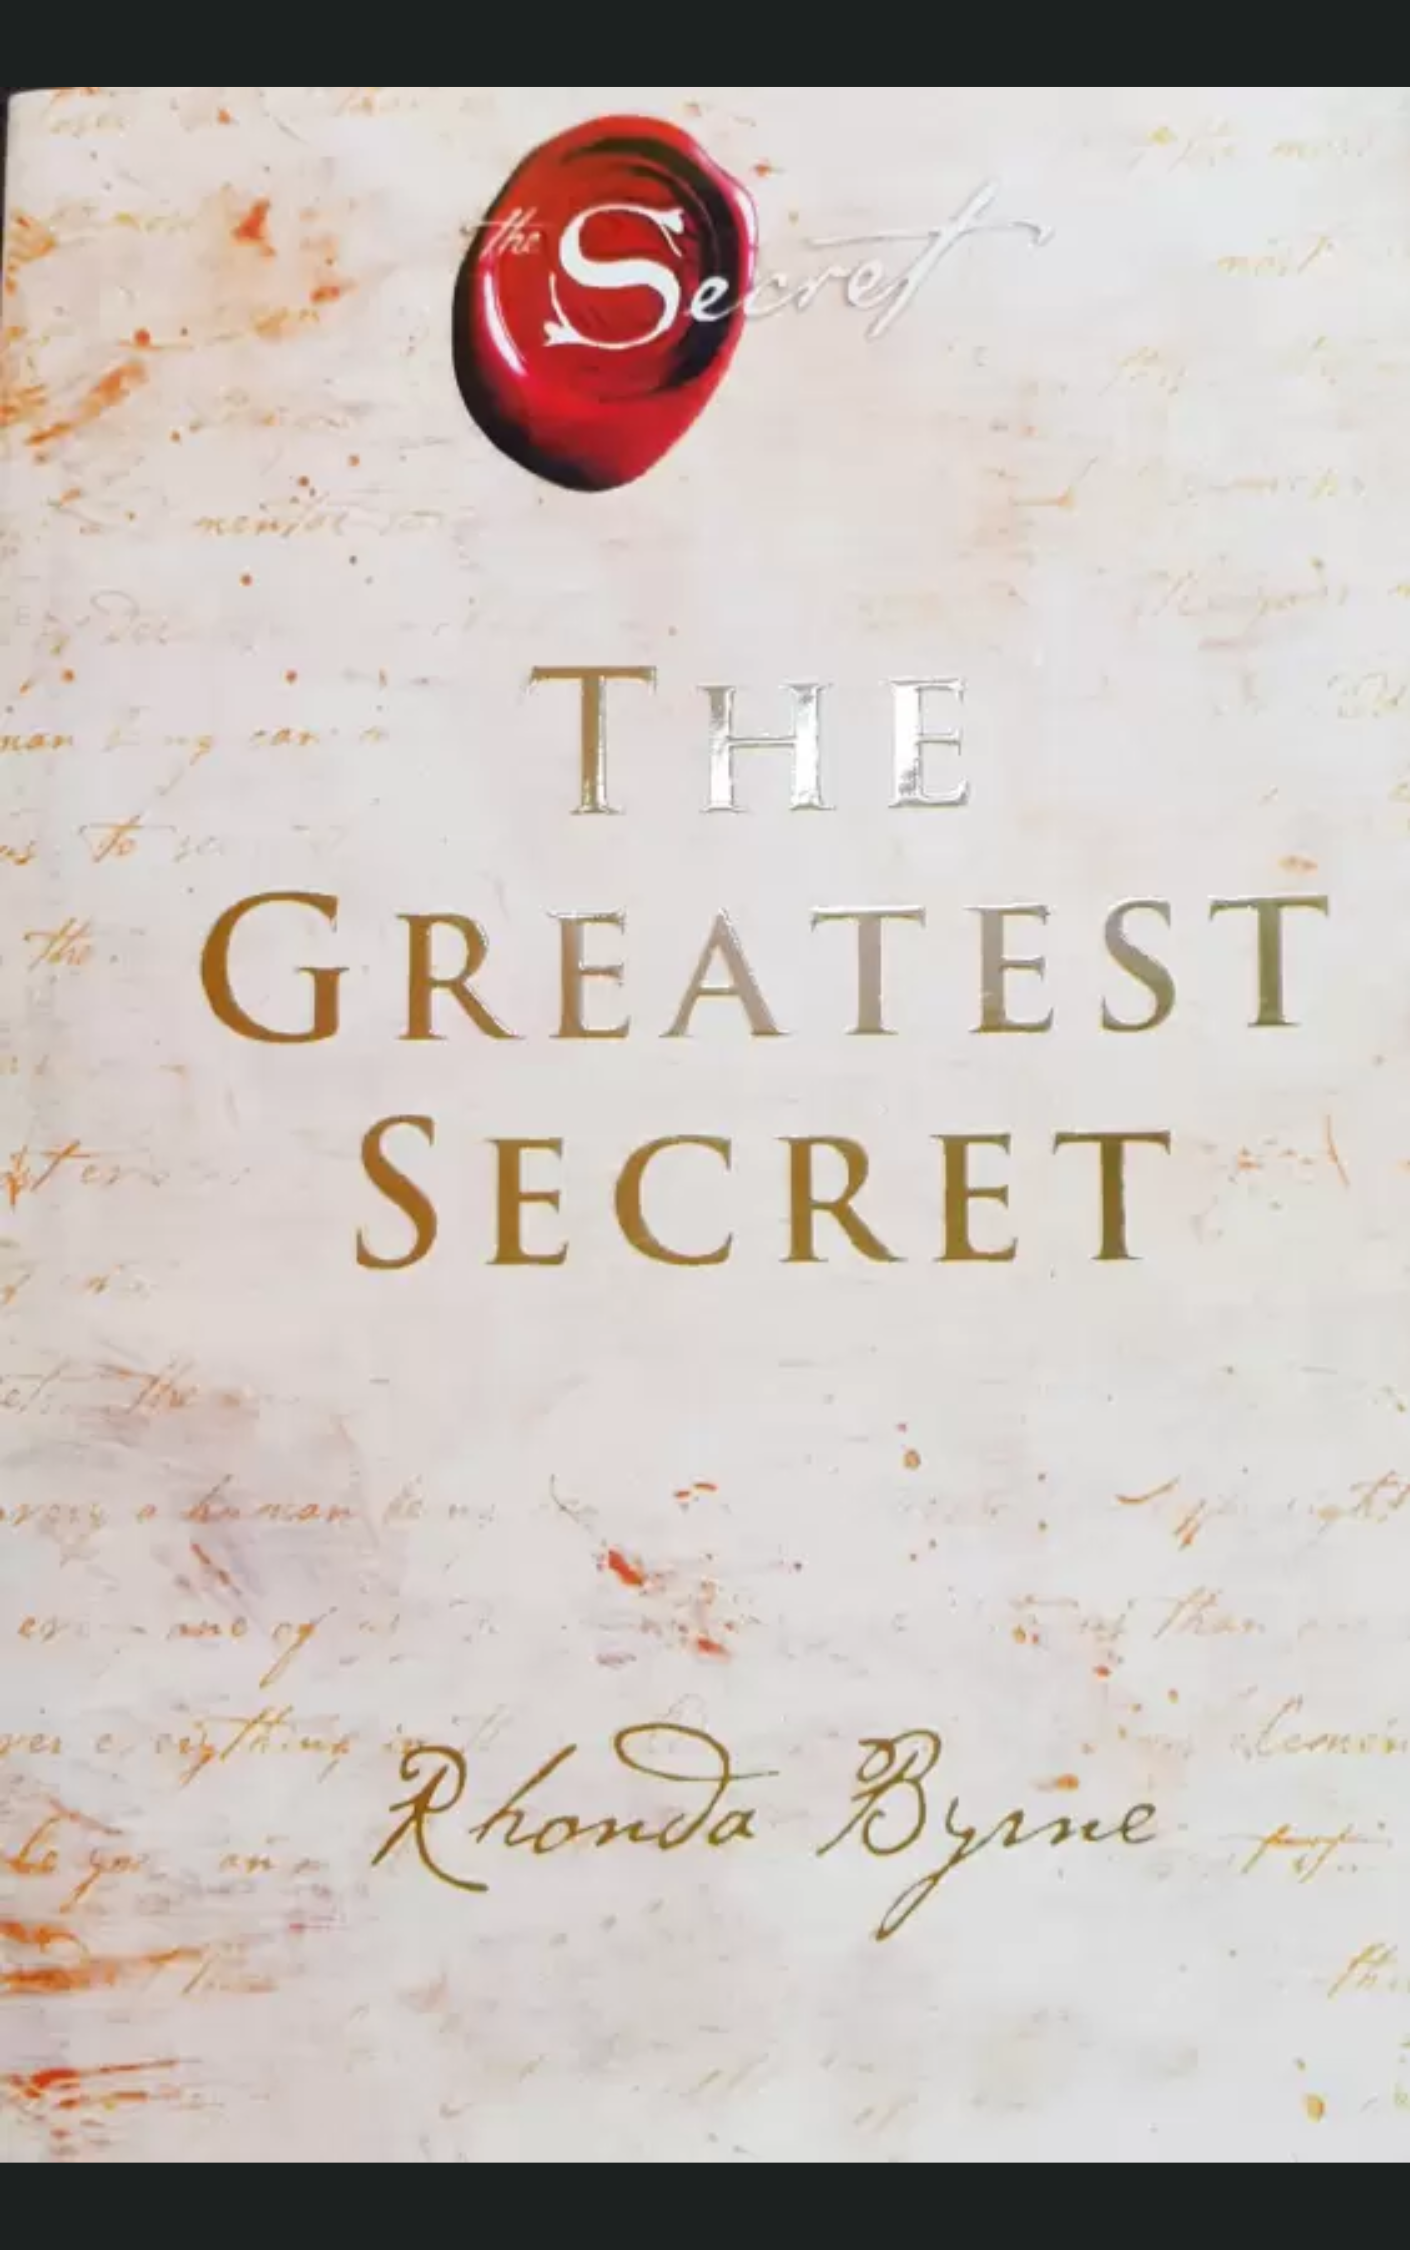 THE GREATEST SECRET by RHONDA BYRNE